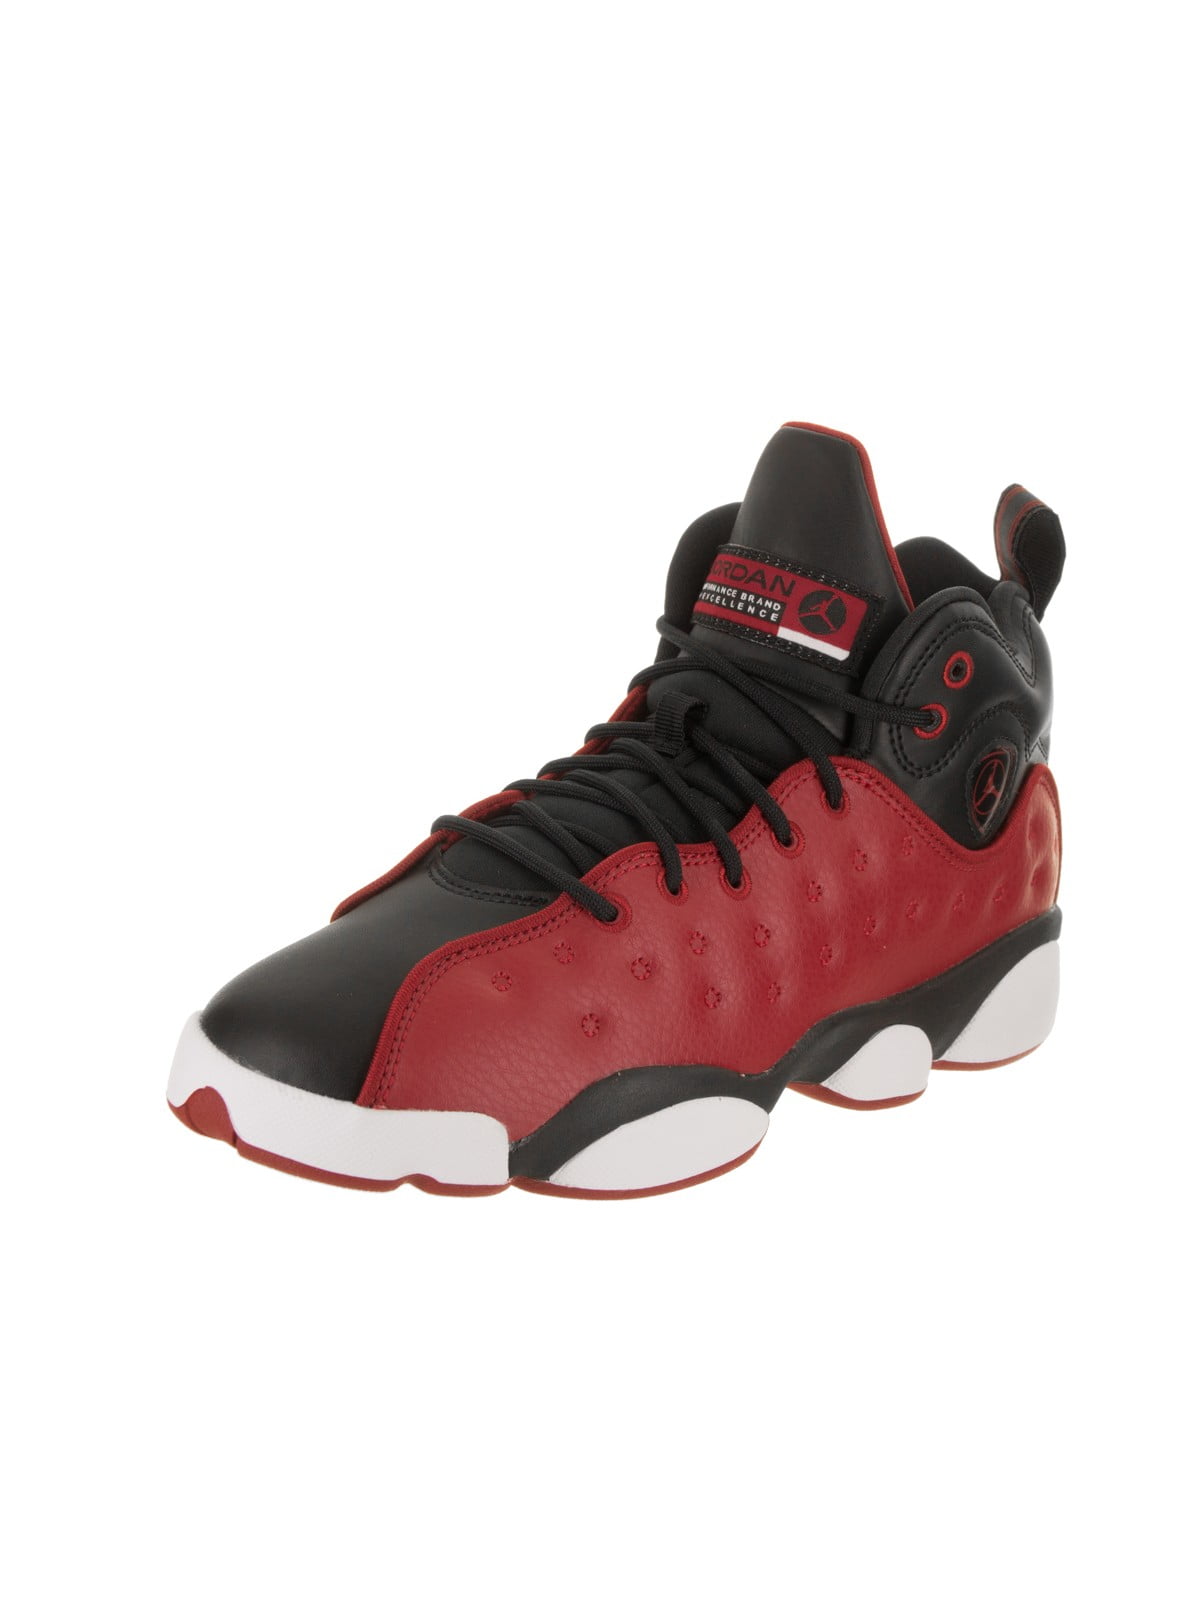 Jordan Nike Jordan Kids Jordan Jumpman Team Ii Bg Basketball Shoe Walmart Com Walmart Com